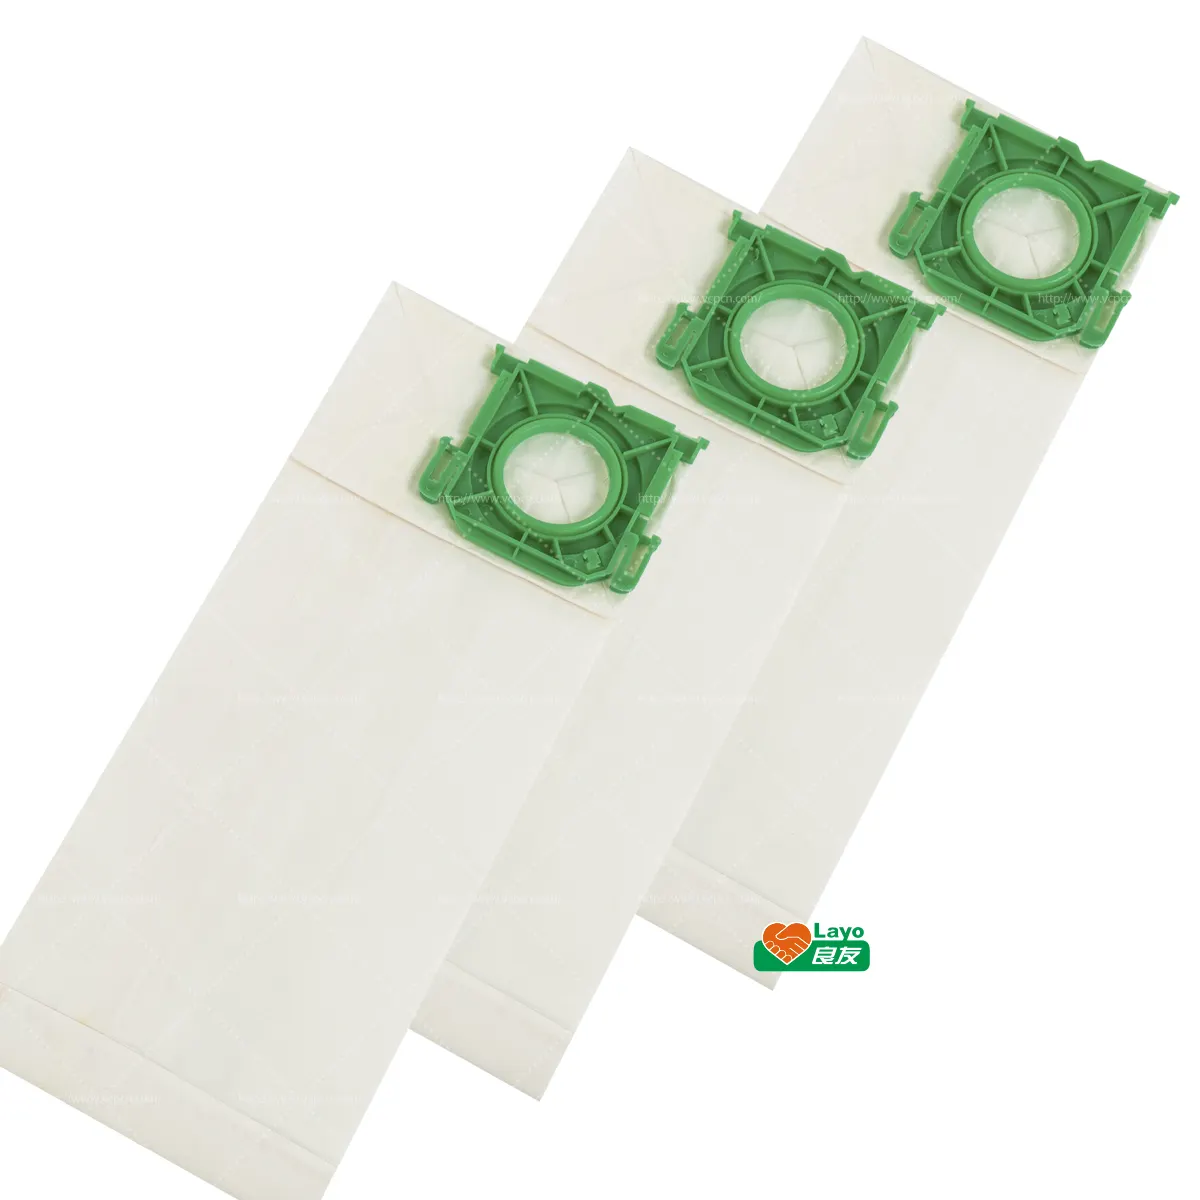 Filtro de papel para aspirador de pó, peças para filtro de papel compatível com sebo k1 k3